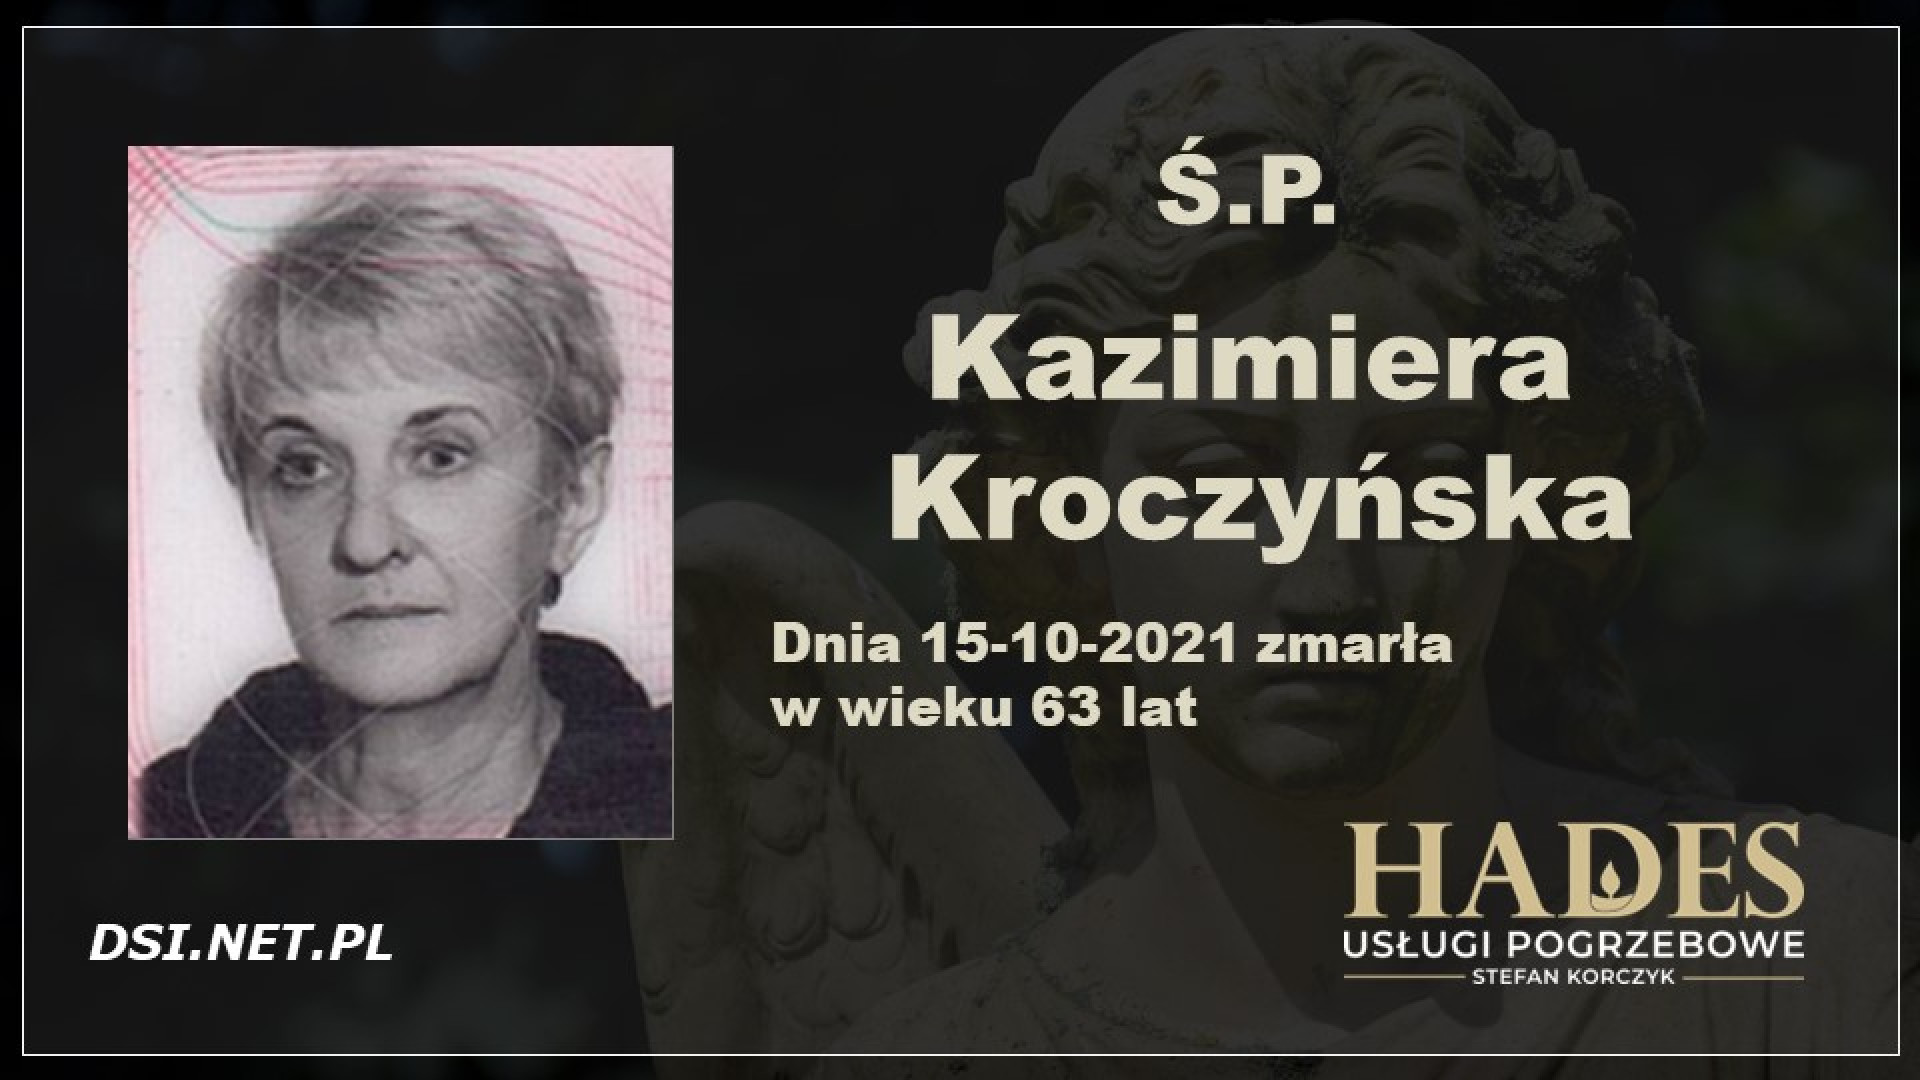 S.P. Kazimiera Kroczyńska